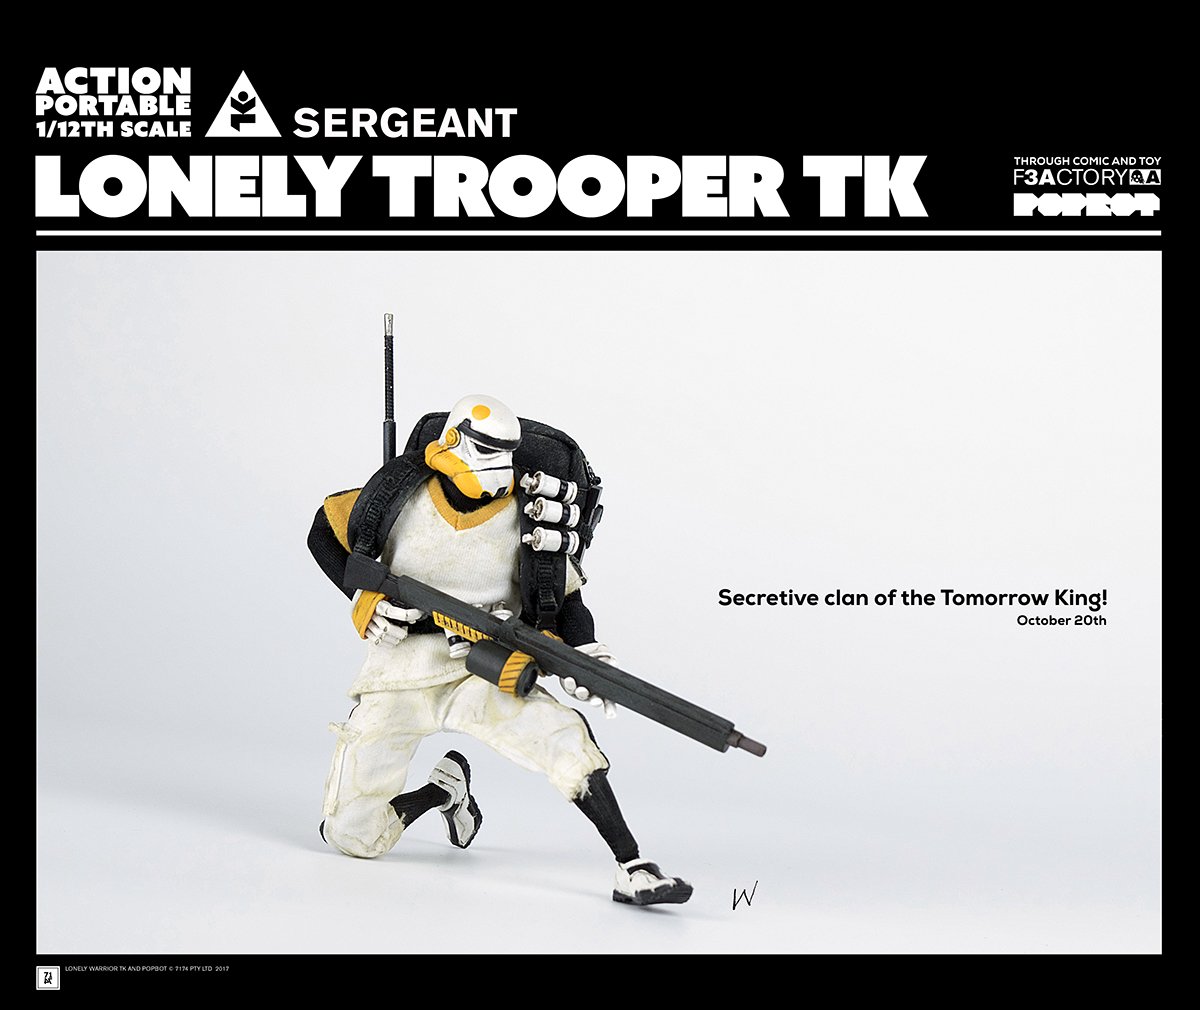 #ActionPortable Lonely Trooper TKs USD99 EACH from 20TH OCT. More photos: worldofthreea.com/threea-product… #threeA #AshleyWood #WorldOf3A #WO3A